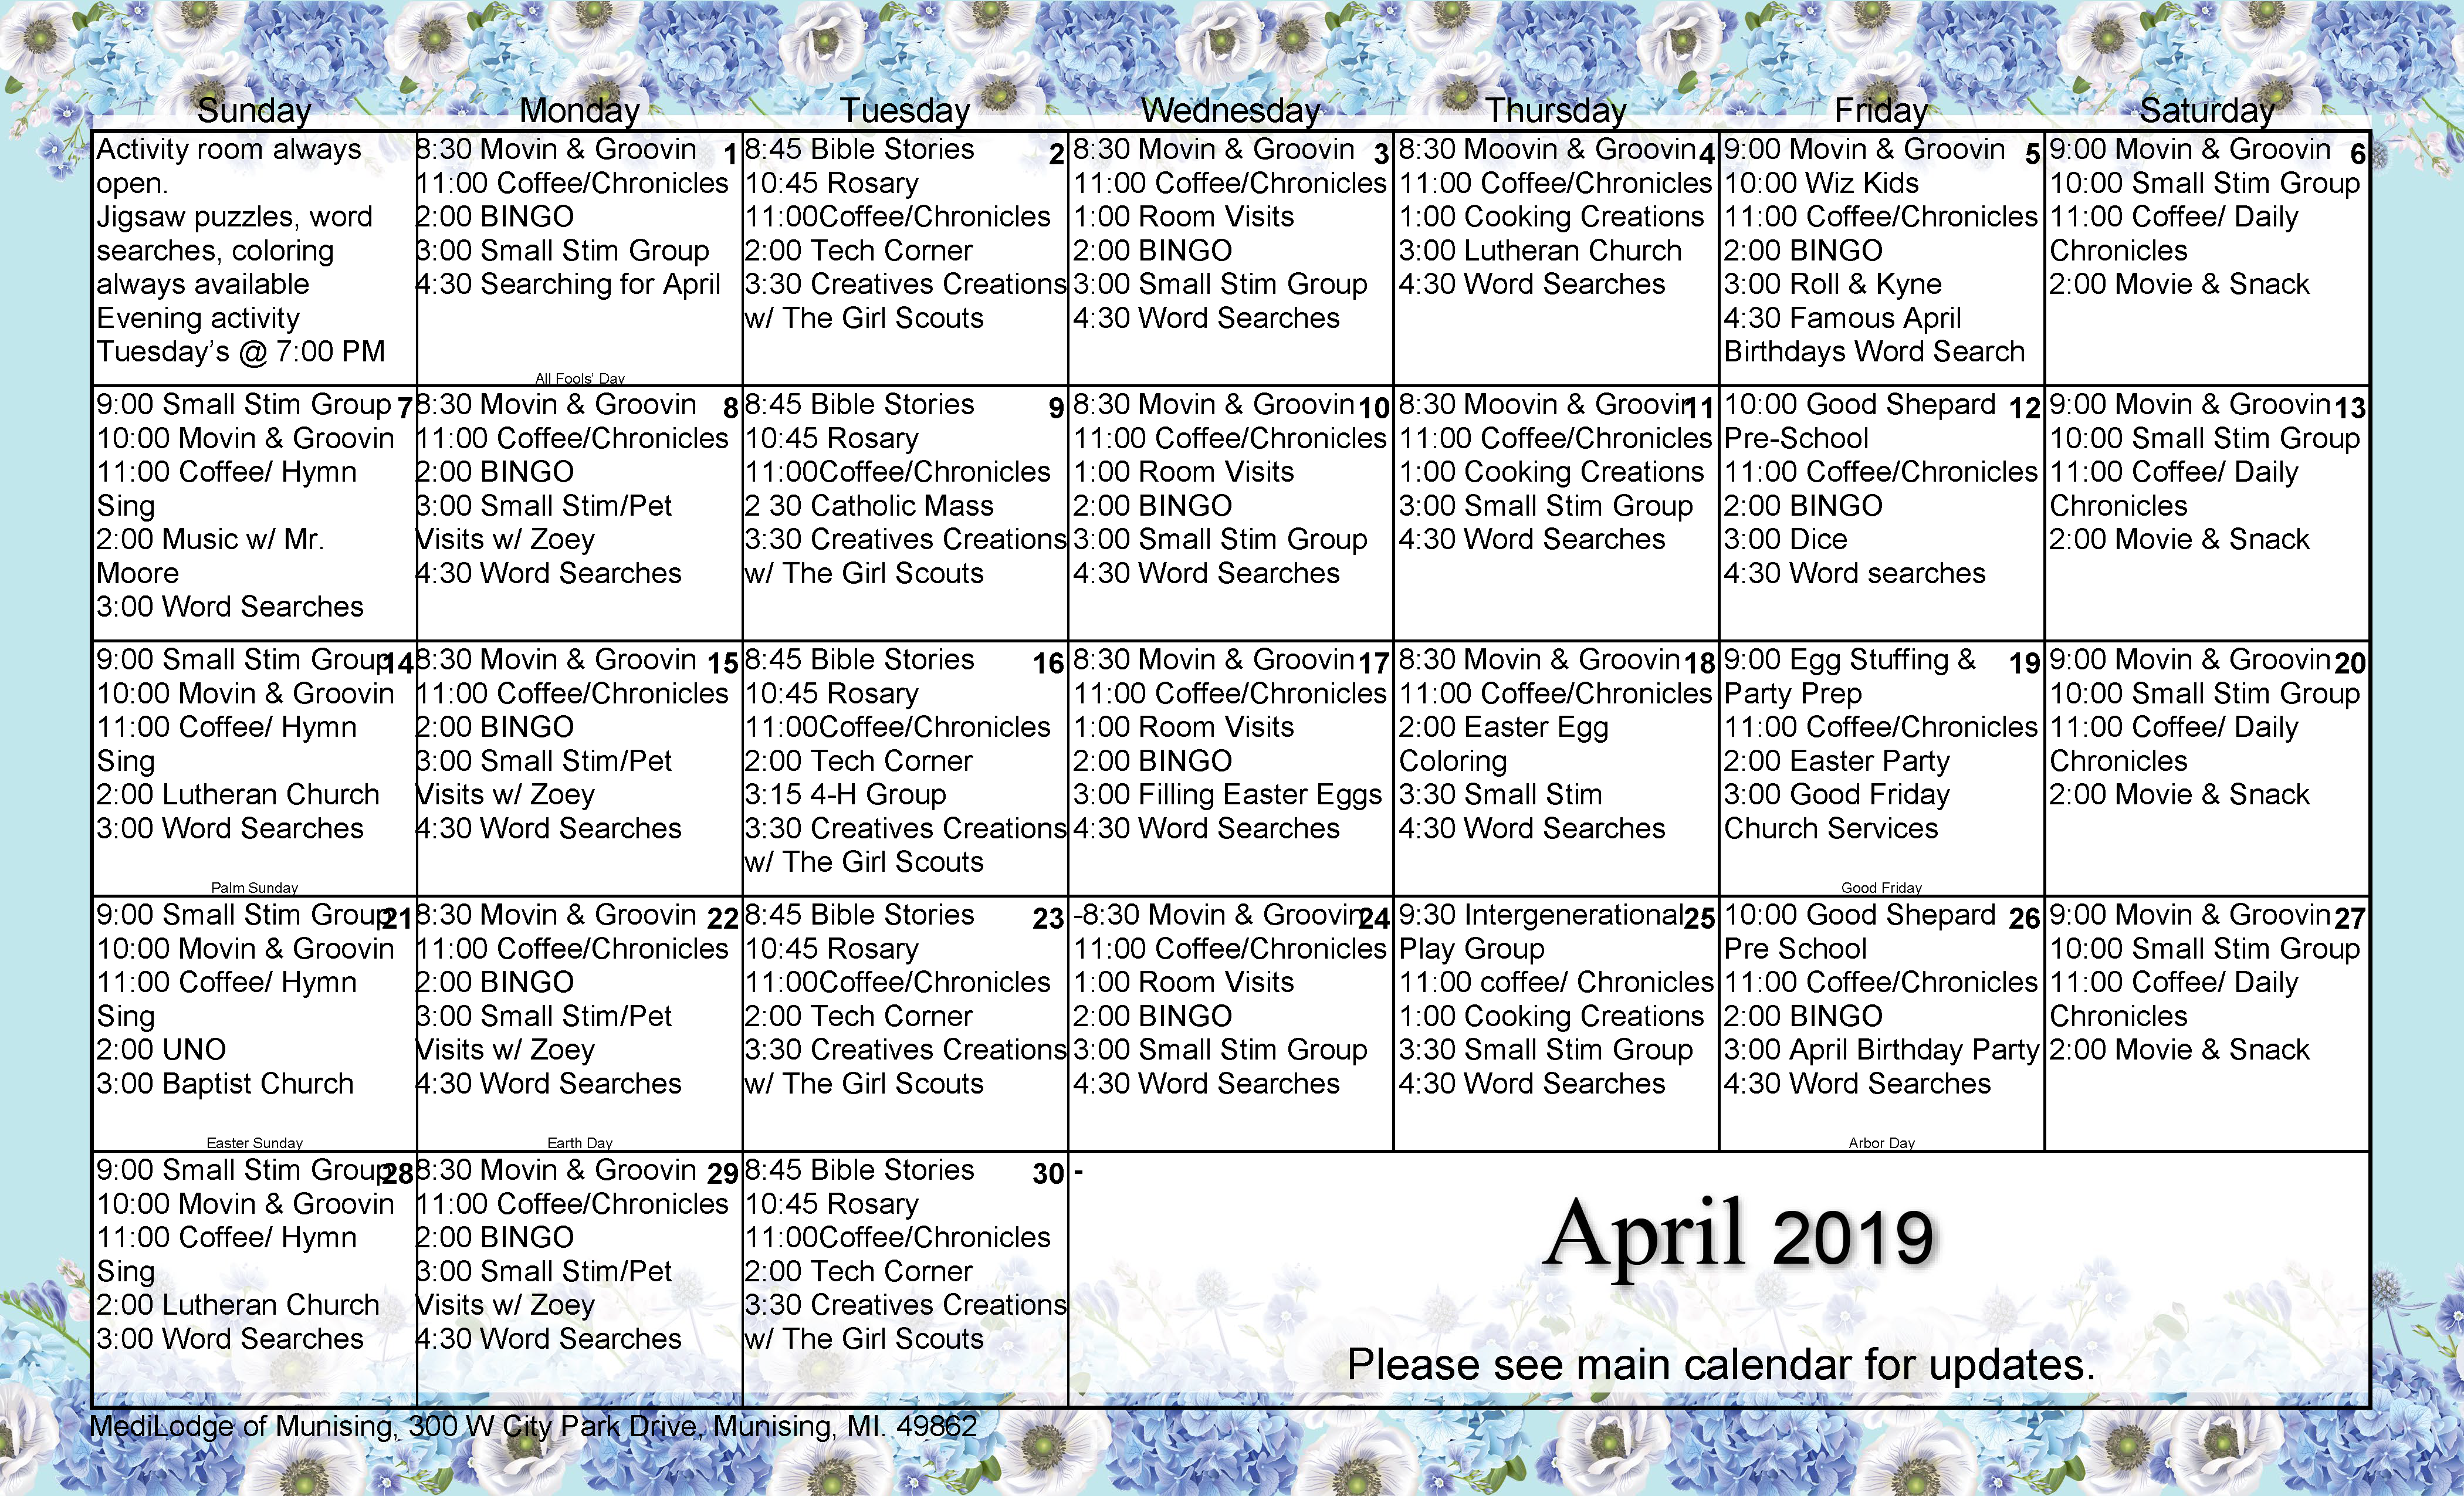 MediLodge of Munising April Calendar of Events